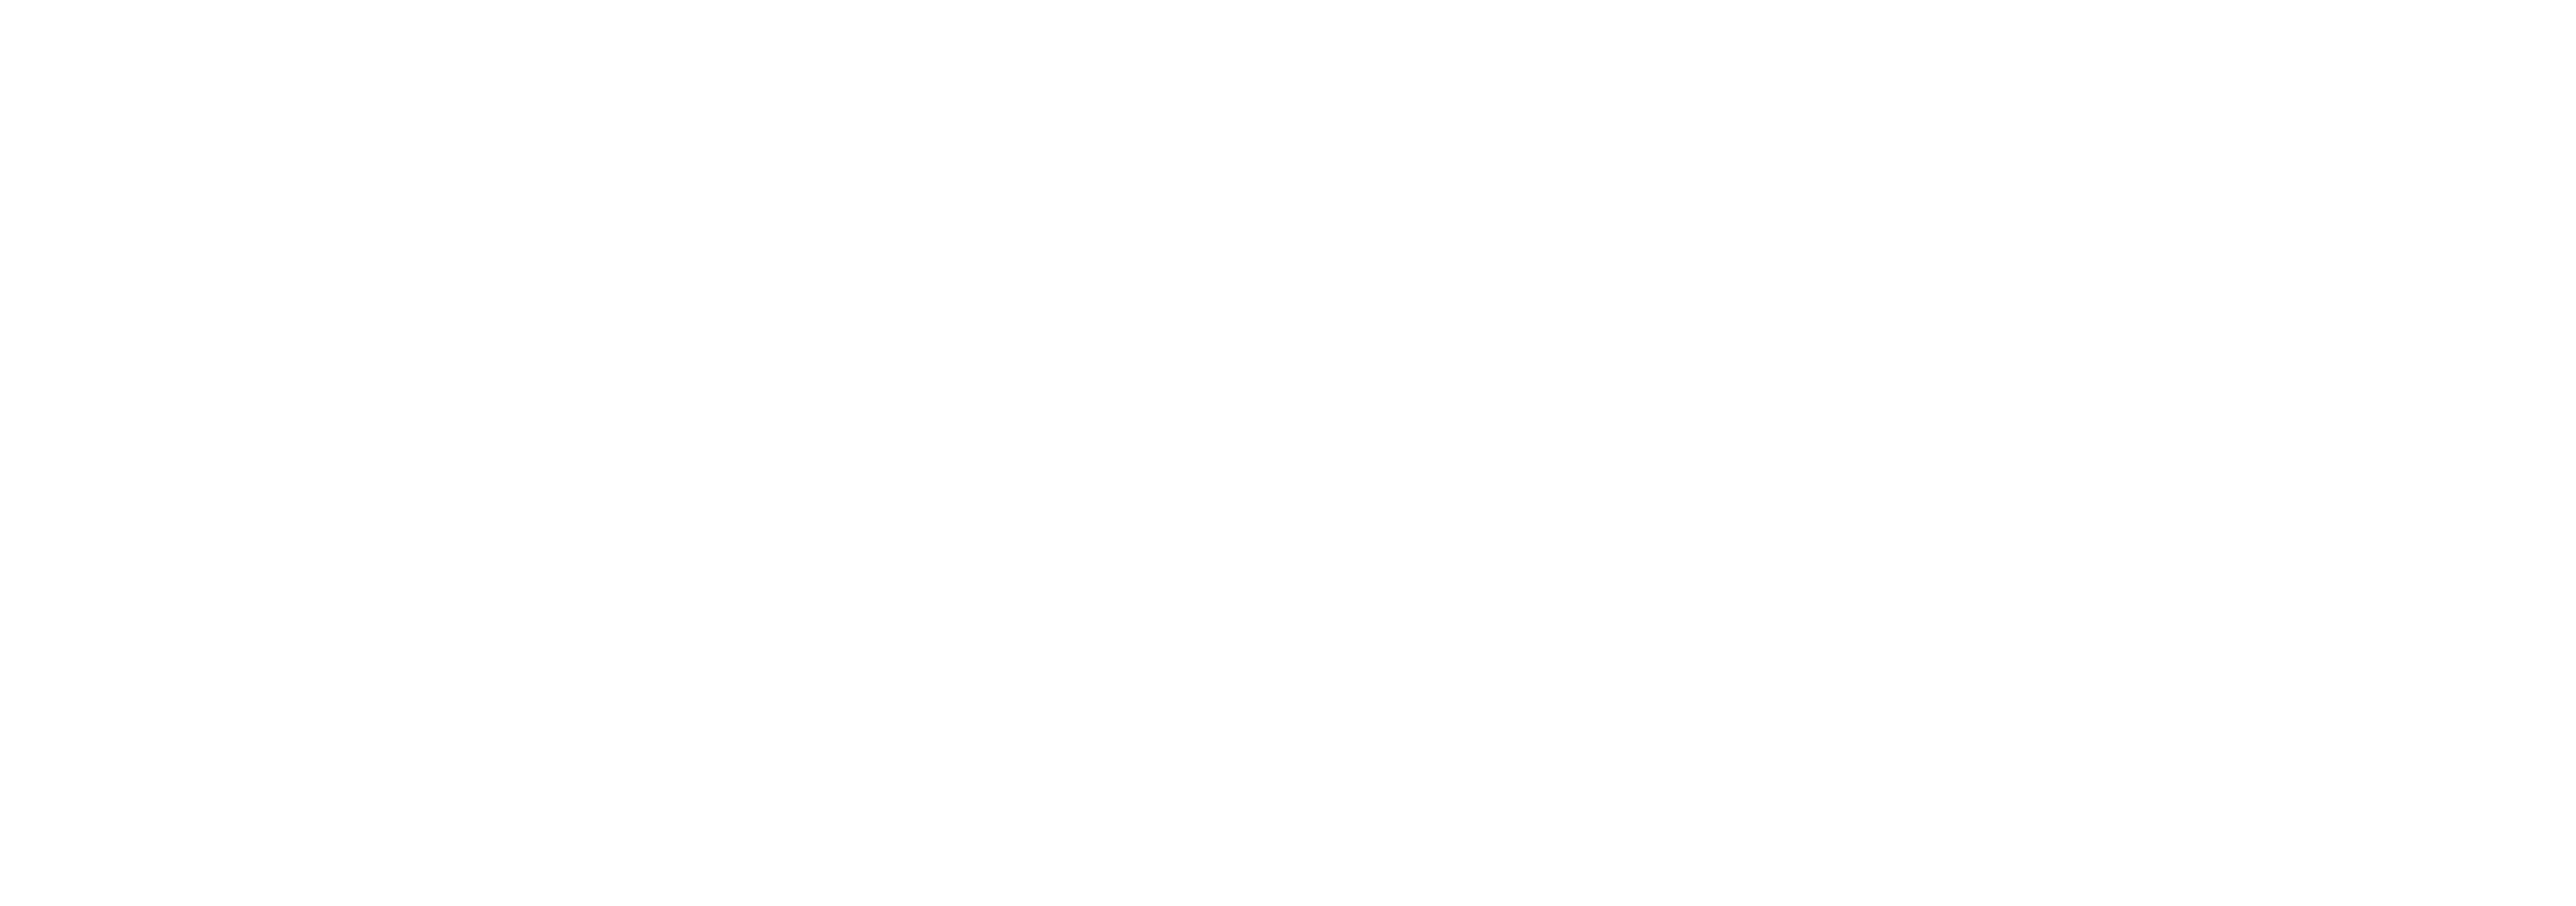 Colorado Time Systems - A Playcore Company